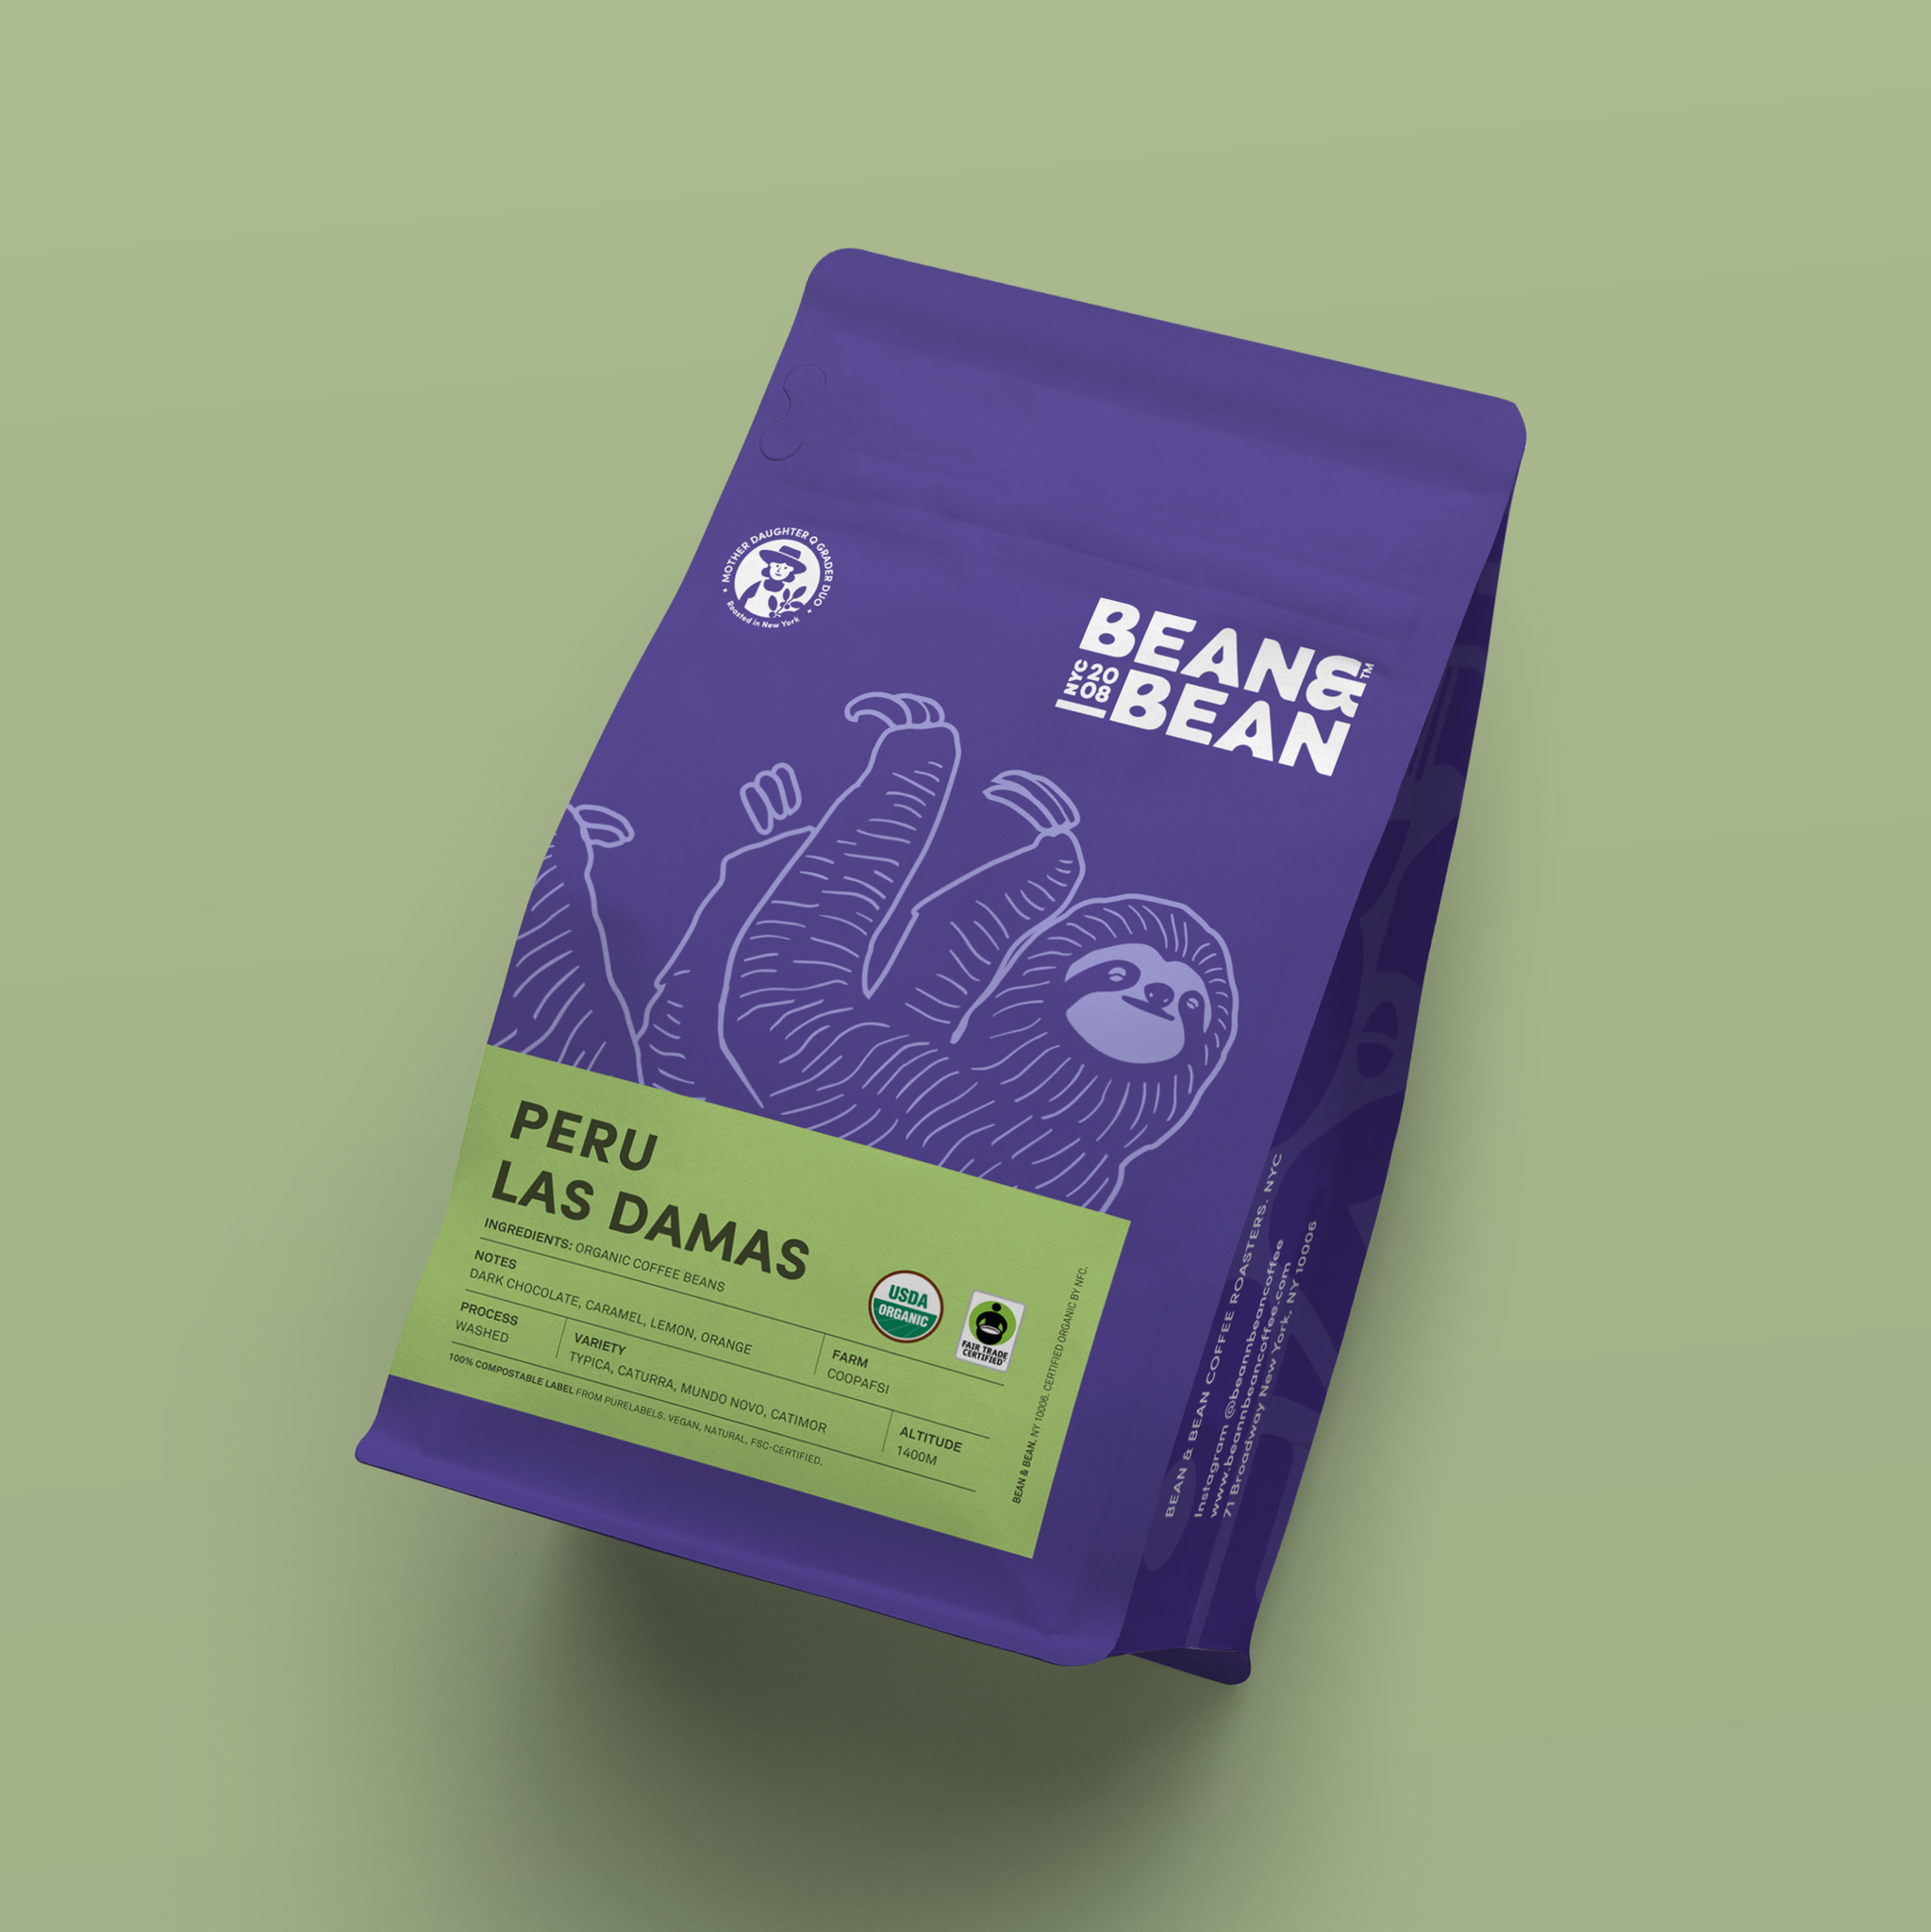 Purple "Bean & Bean Coffee Roasters" bag with a green label that says "Peru Las Damas"